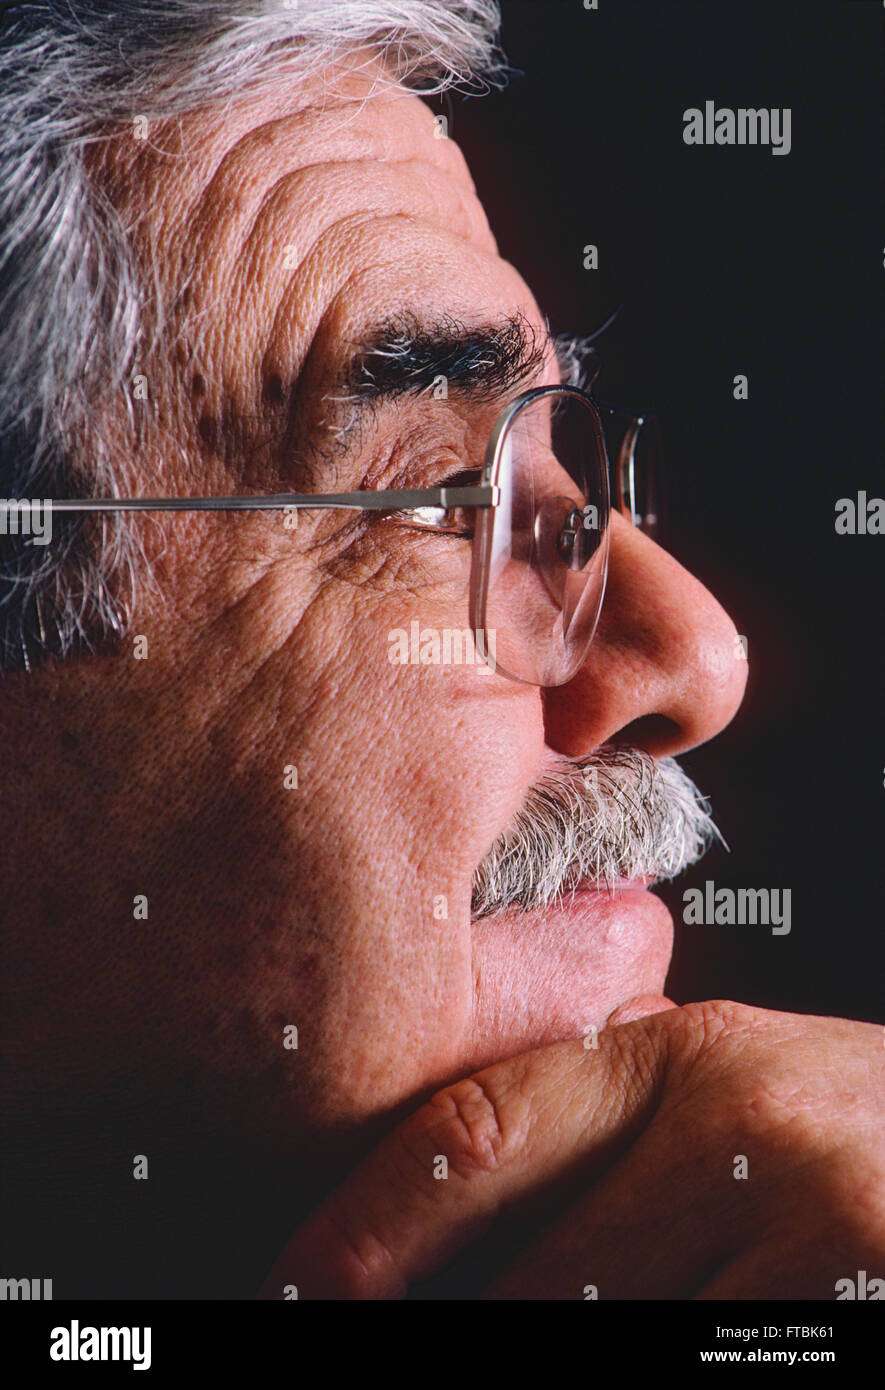 Studio portrait of distinquished older gentleman with eyeglasses, mustache & grey hair Stock Photo